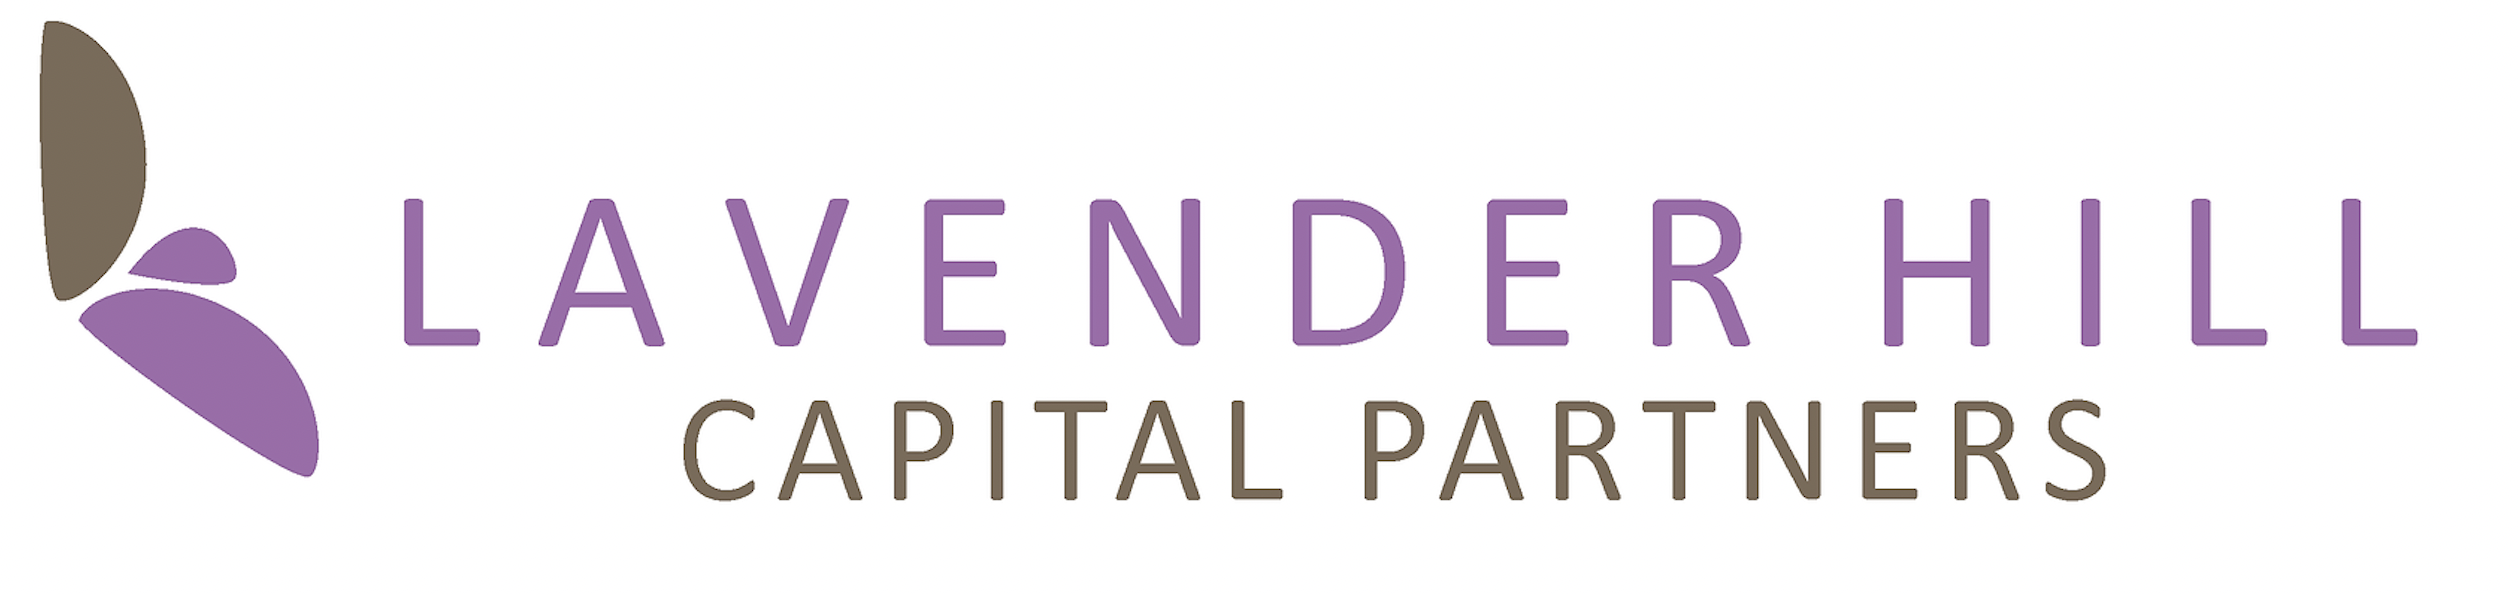 Lavender Hill Capital Partners